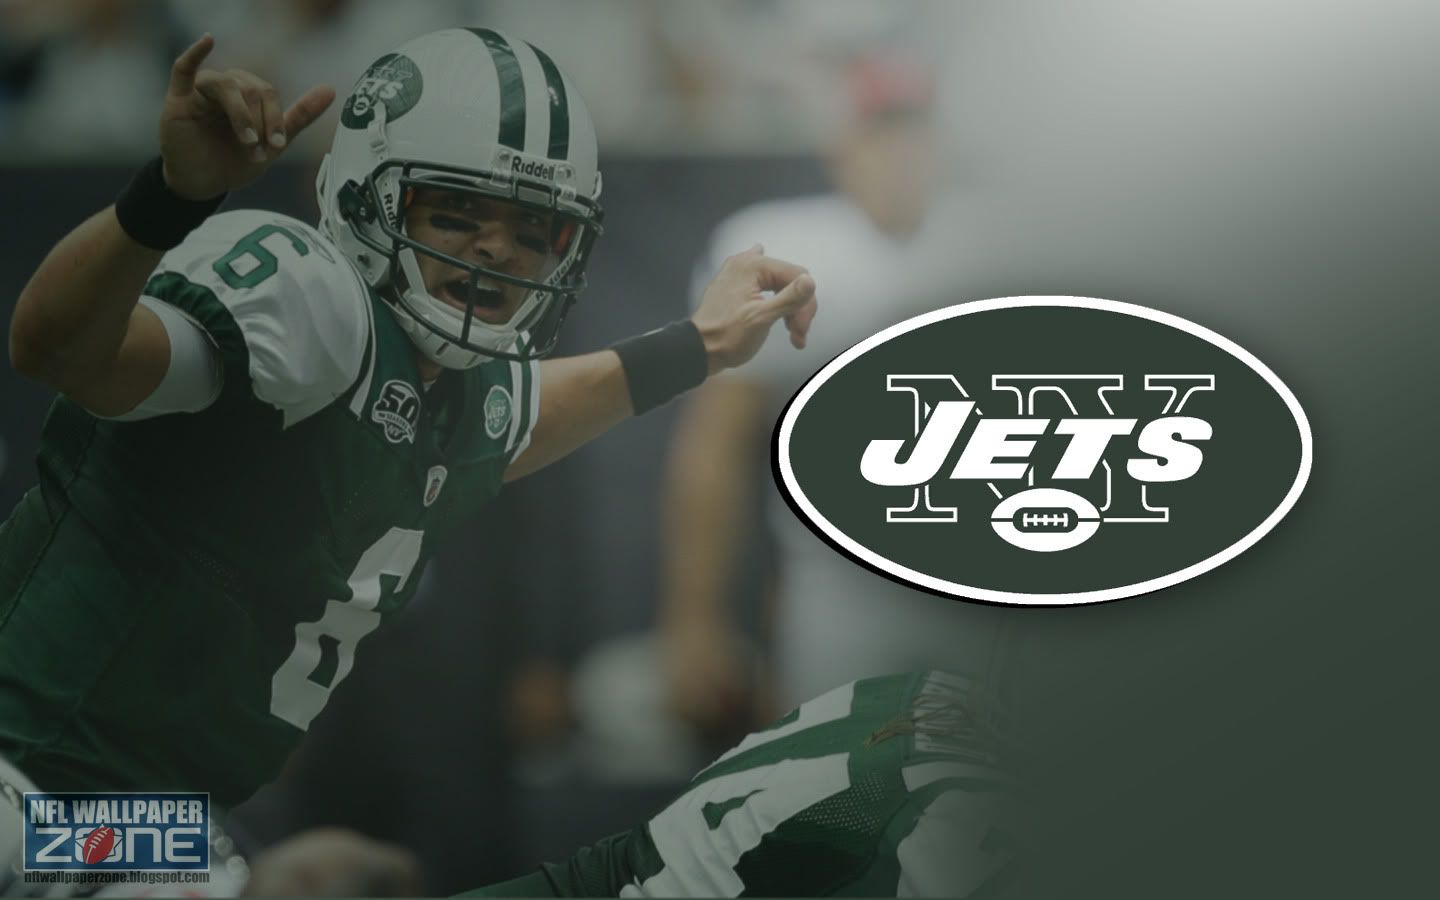 NFL Wallpaper Zone: NY Jets Wallpaper - NEW YORK JETS Logo Desktop ...